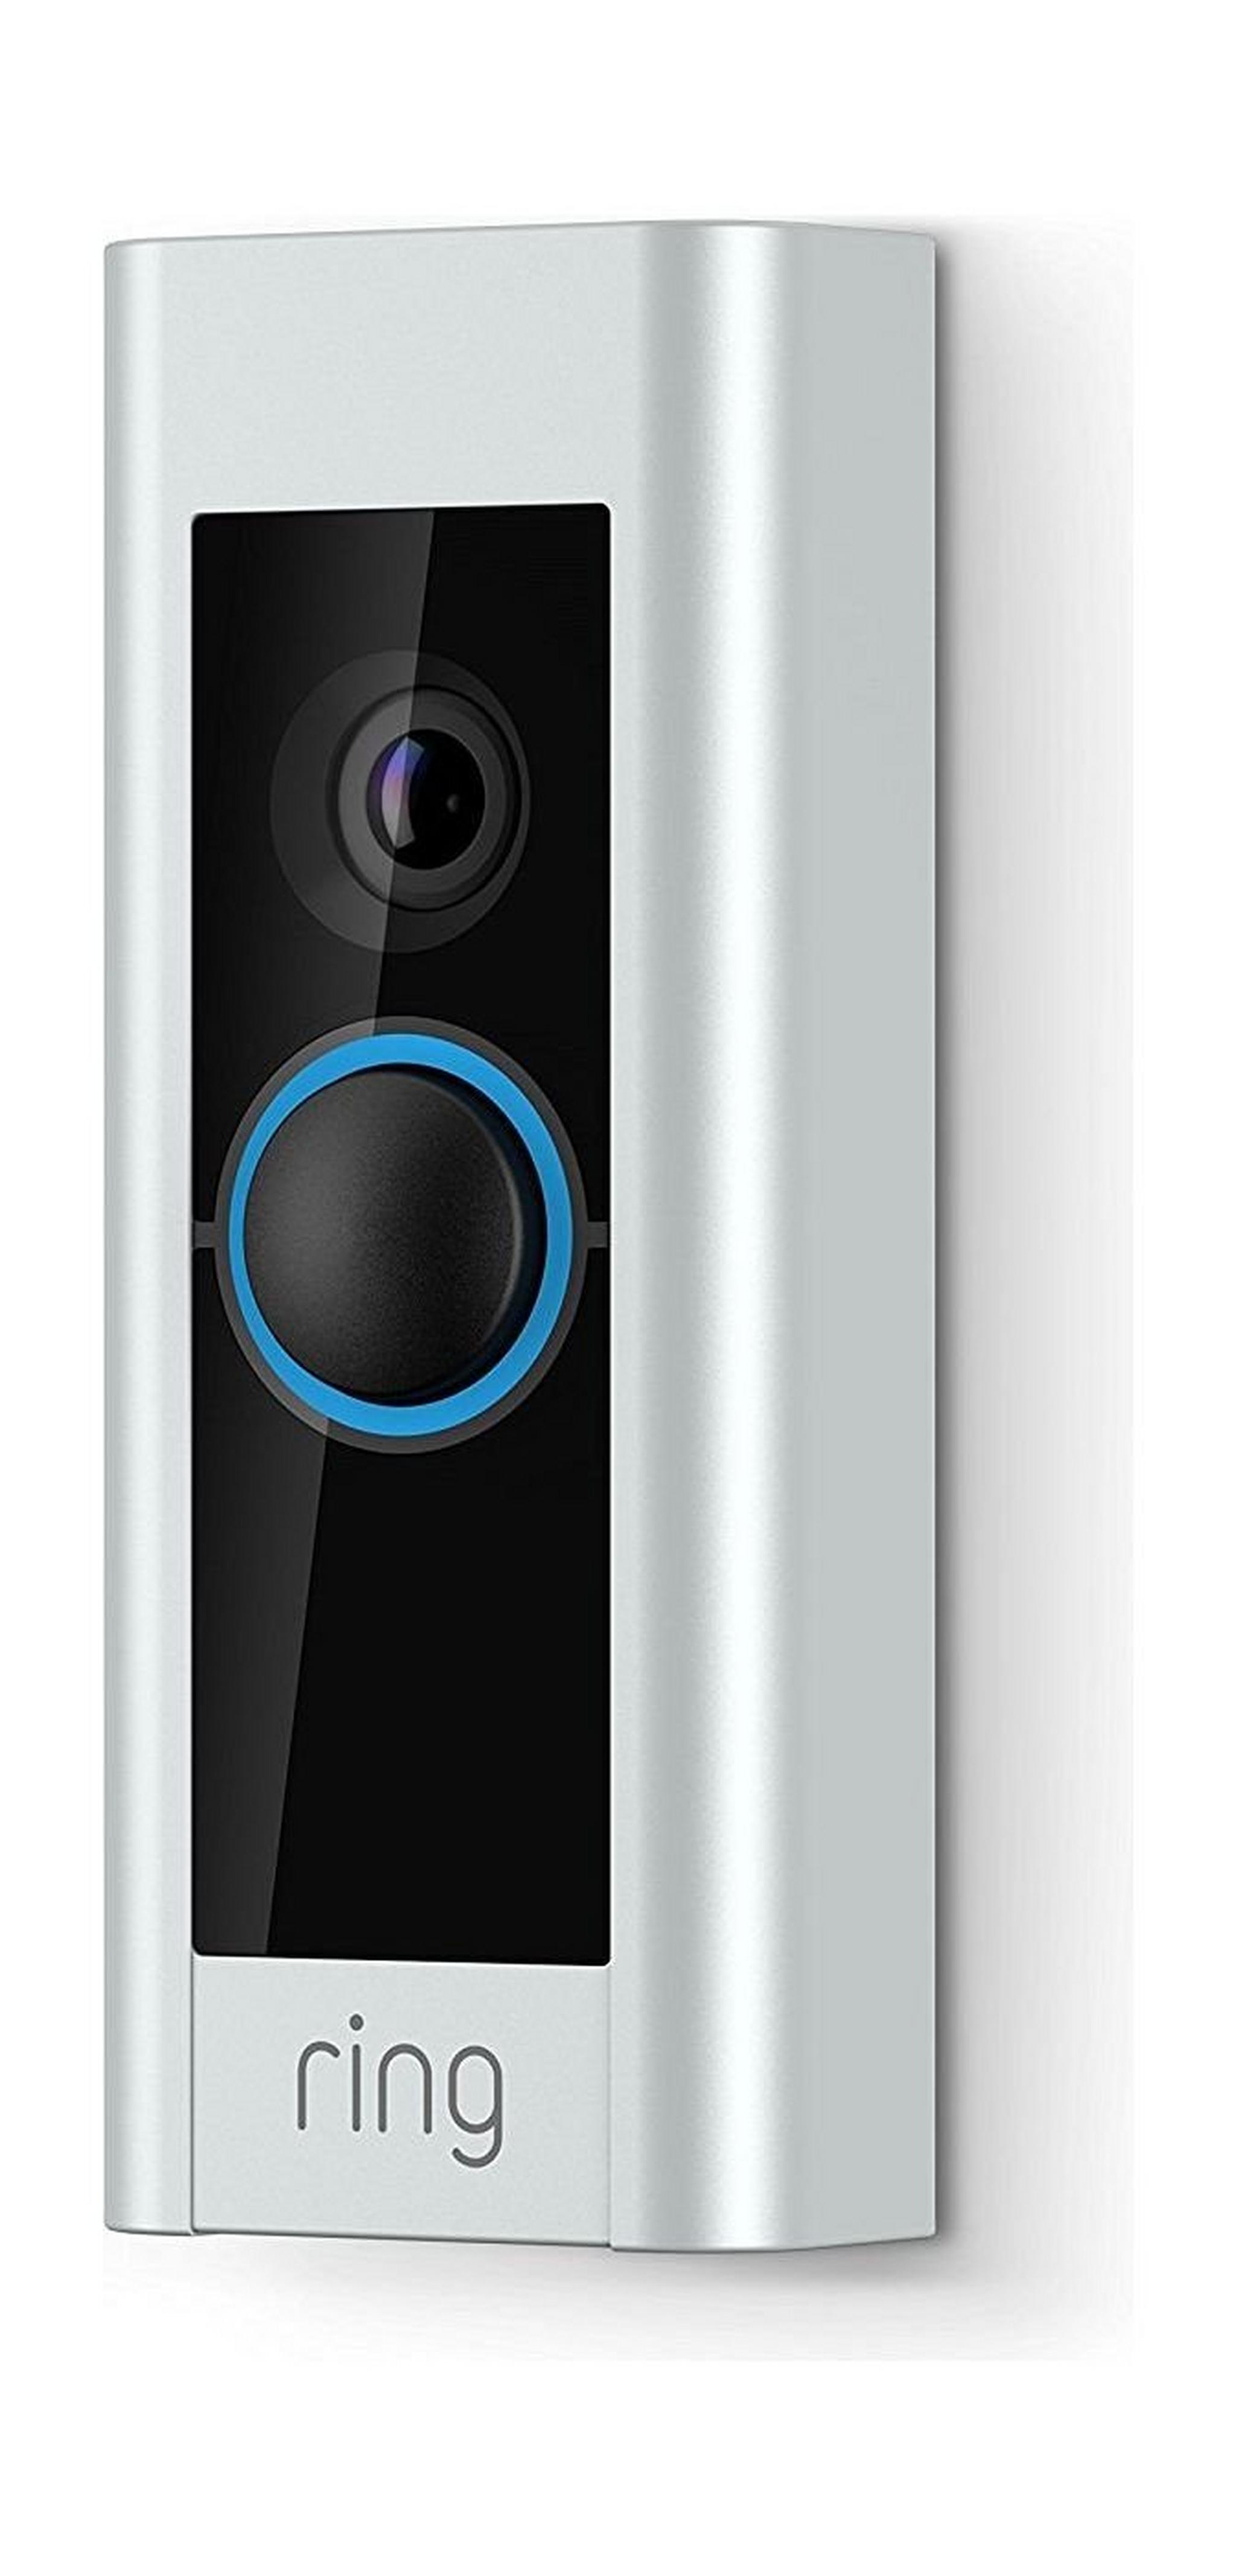 Ring Video DoorBell Pro - Hardwired Wi-Fi Doorbell Security Camera